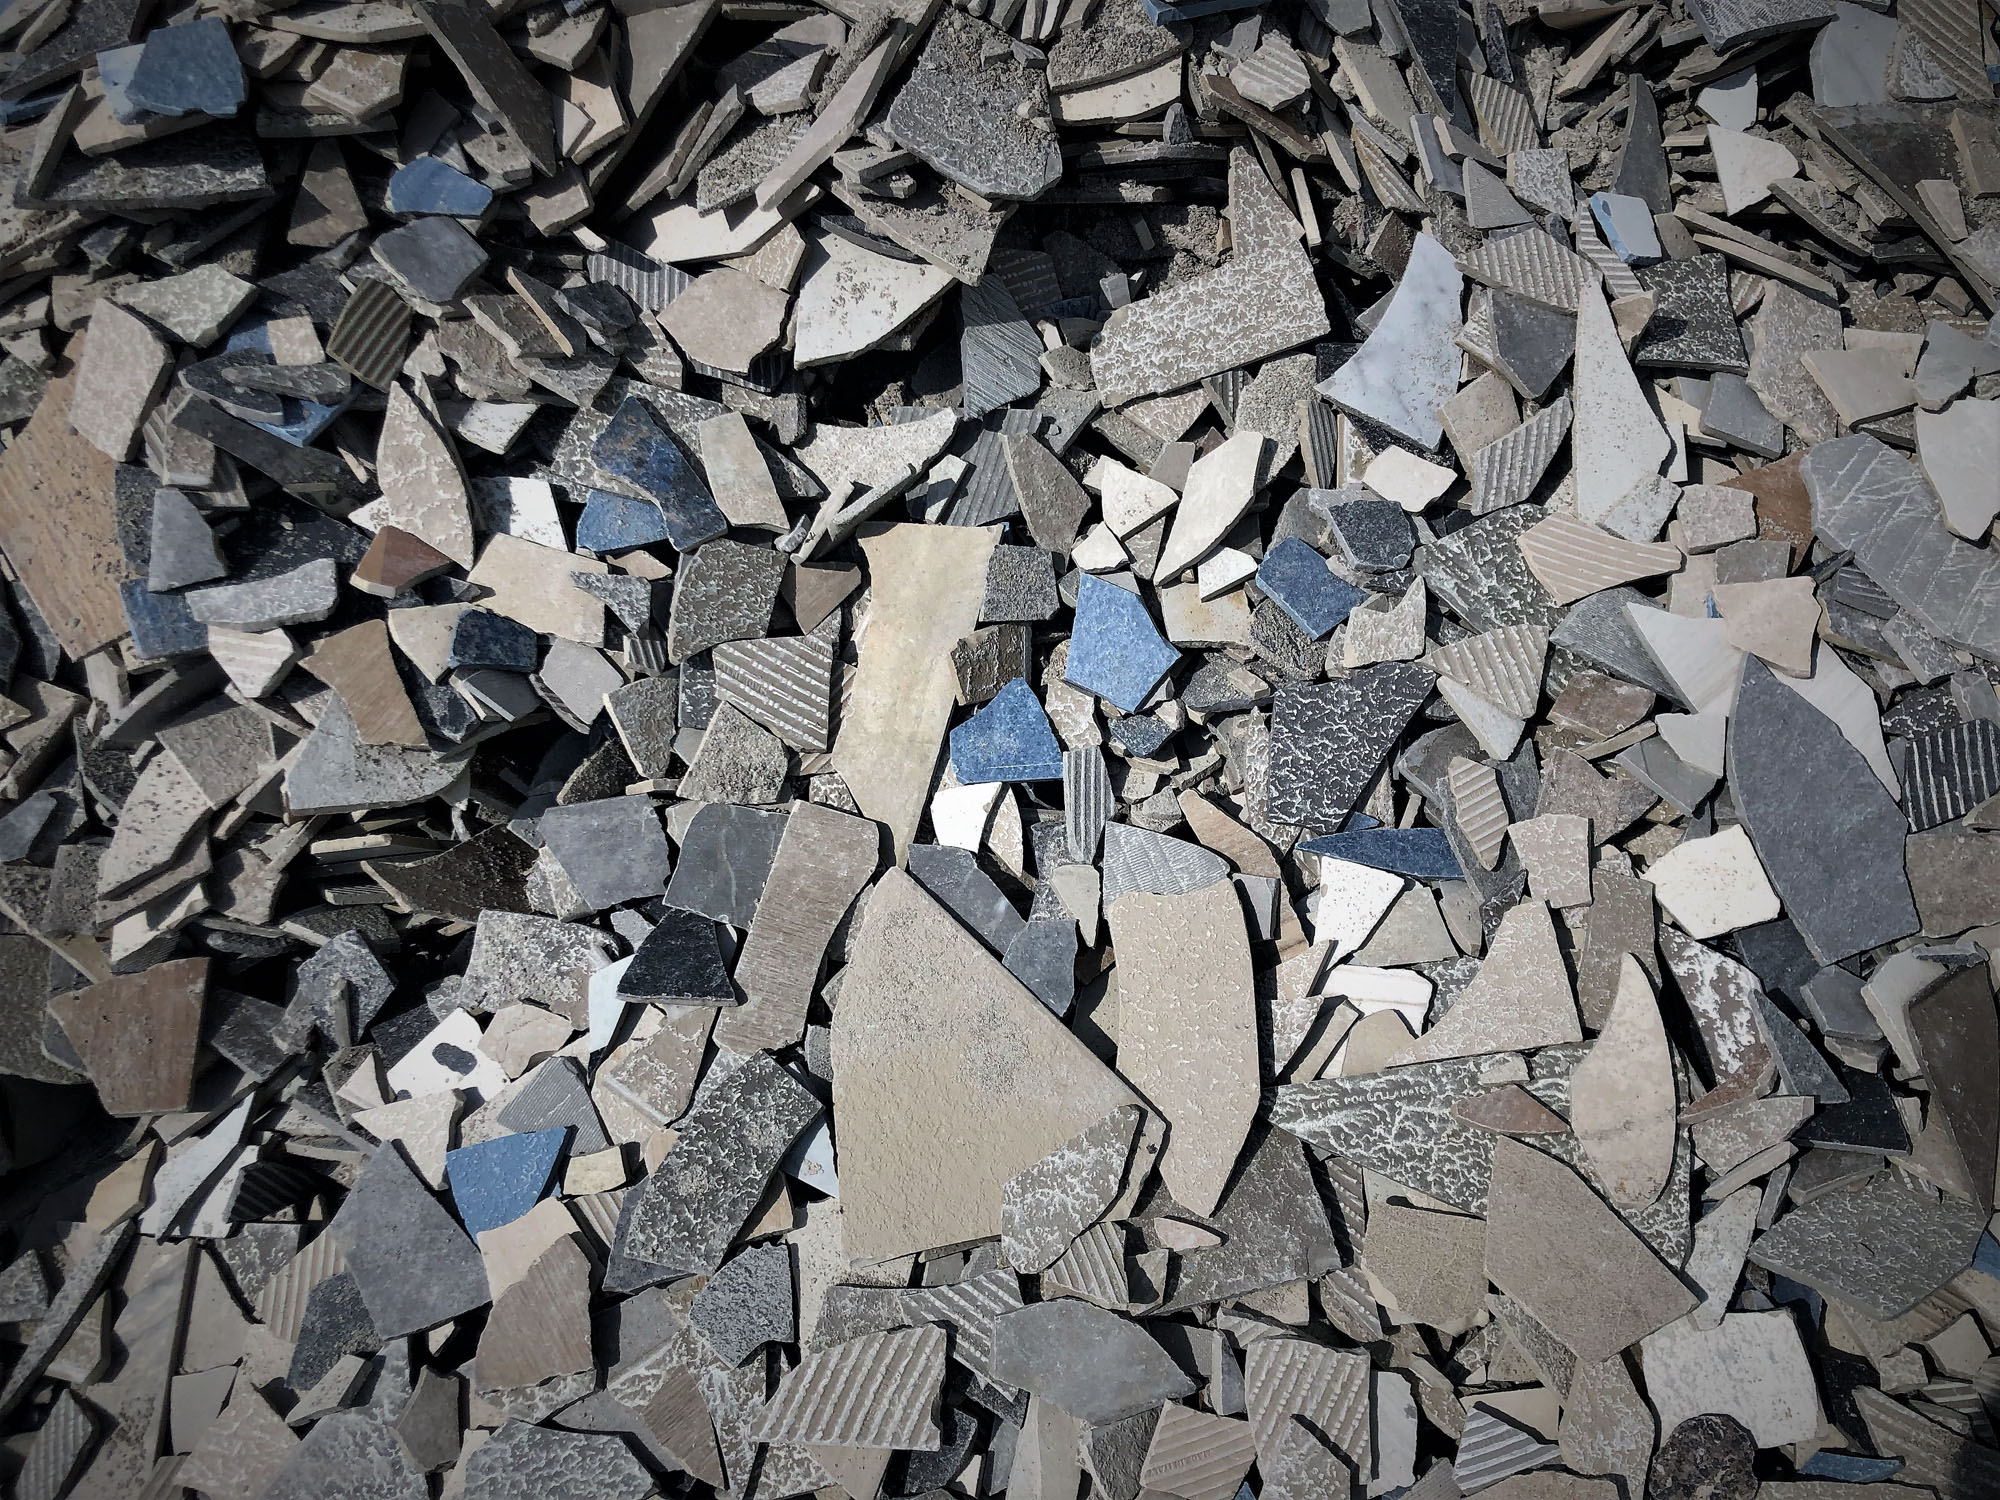 A close-up of a pile of broken bits of ceramic tile.